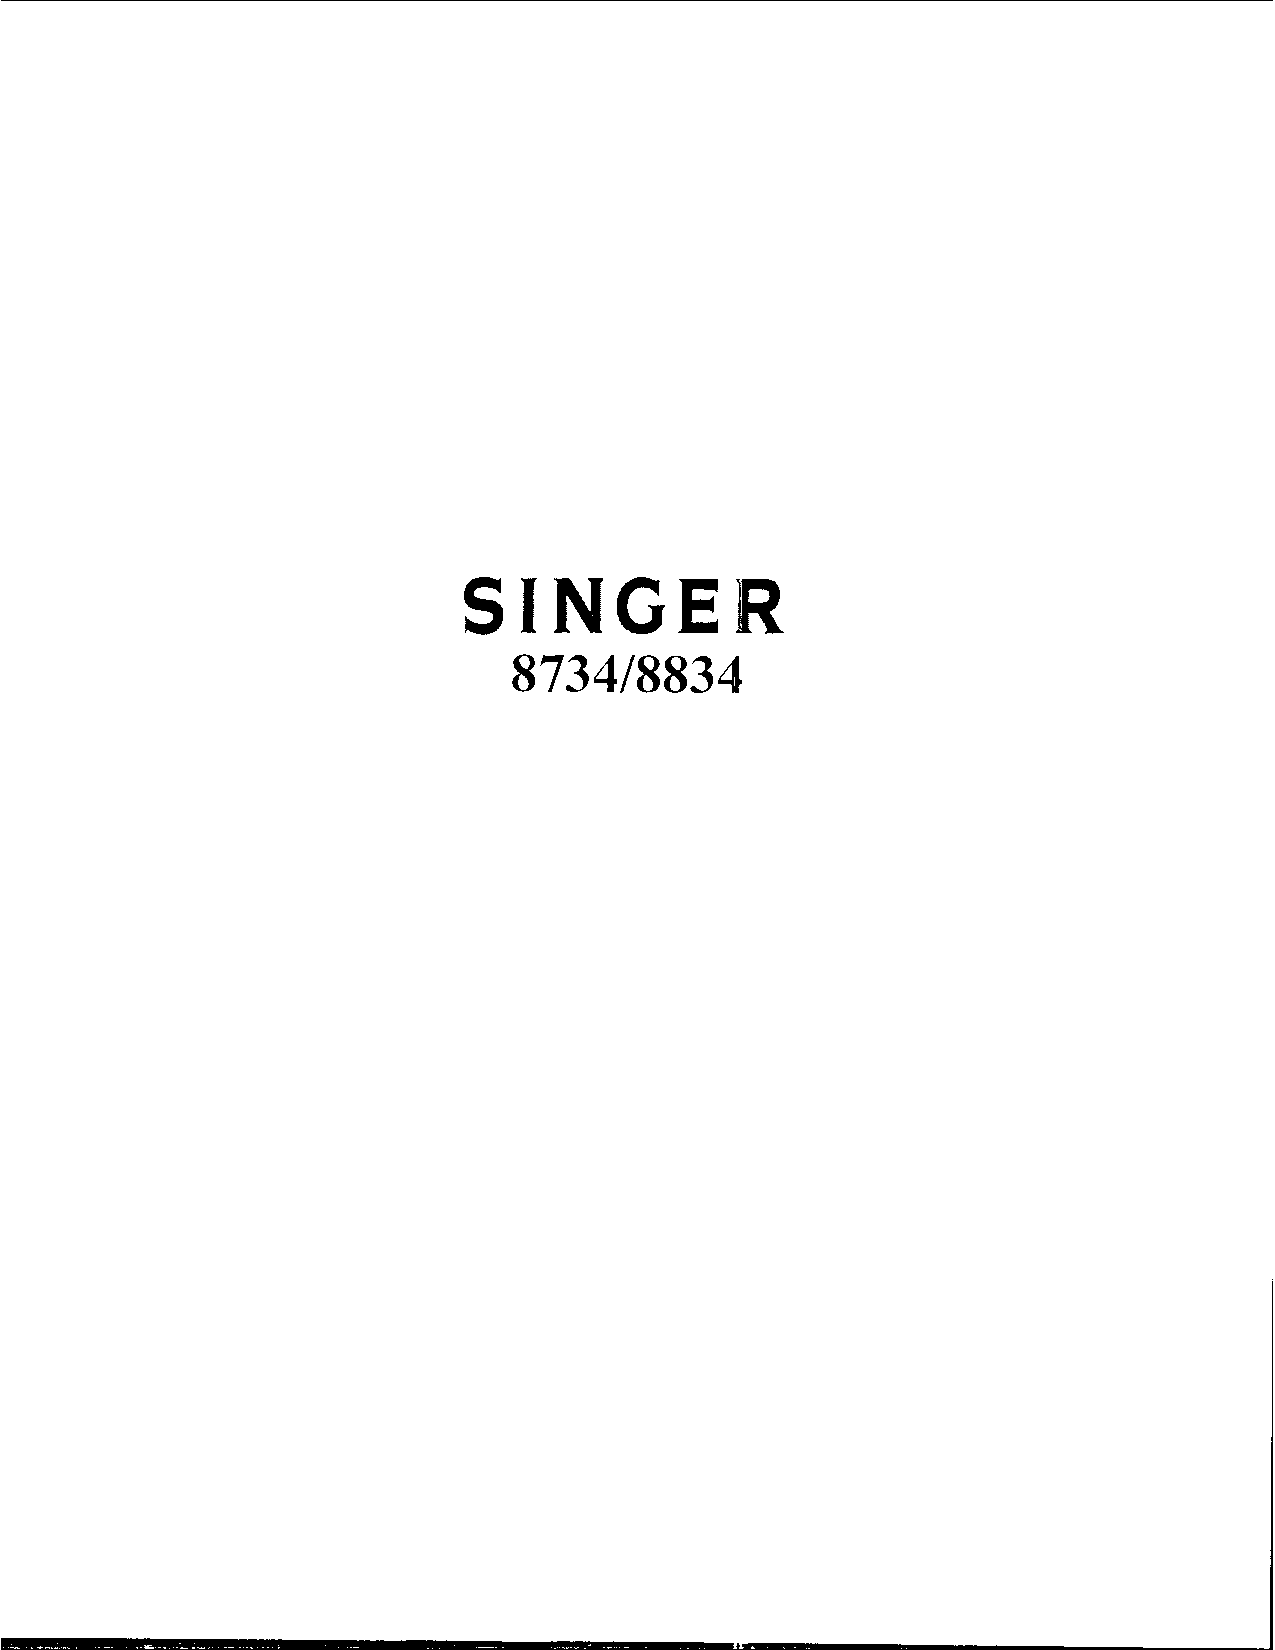 Singer 8834, 8734 User Manual